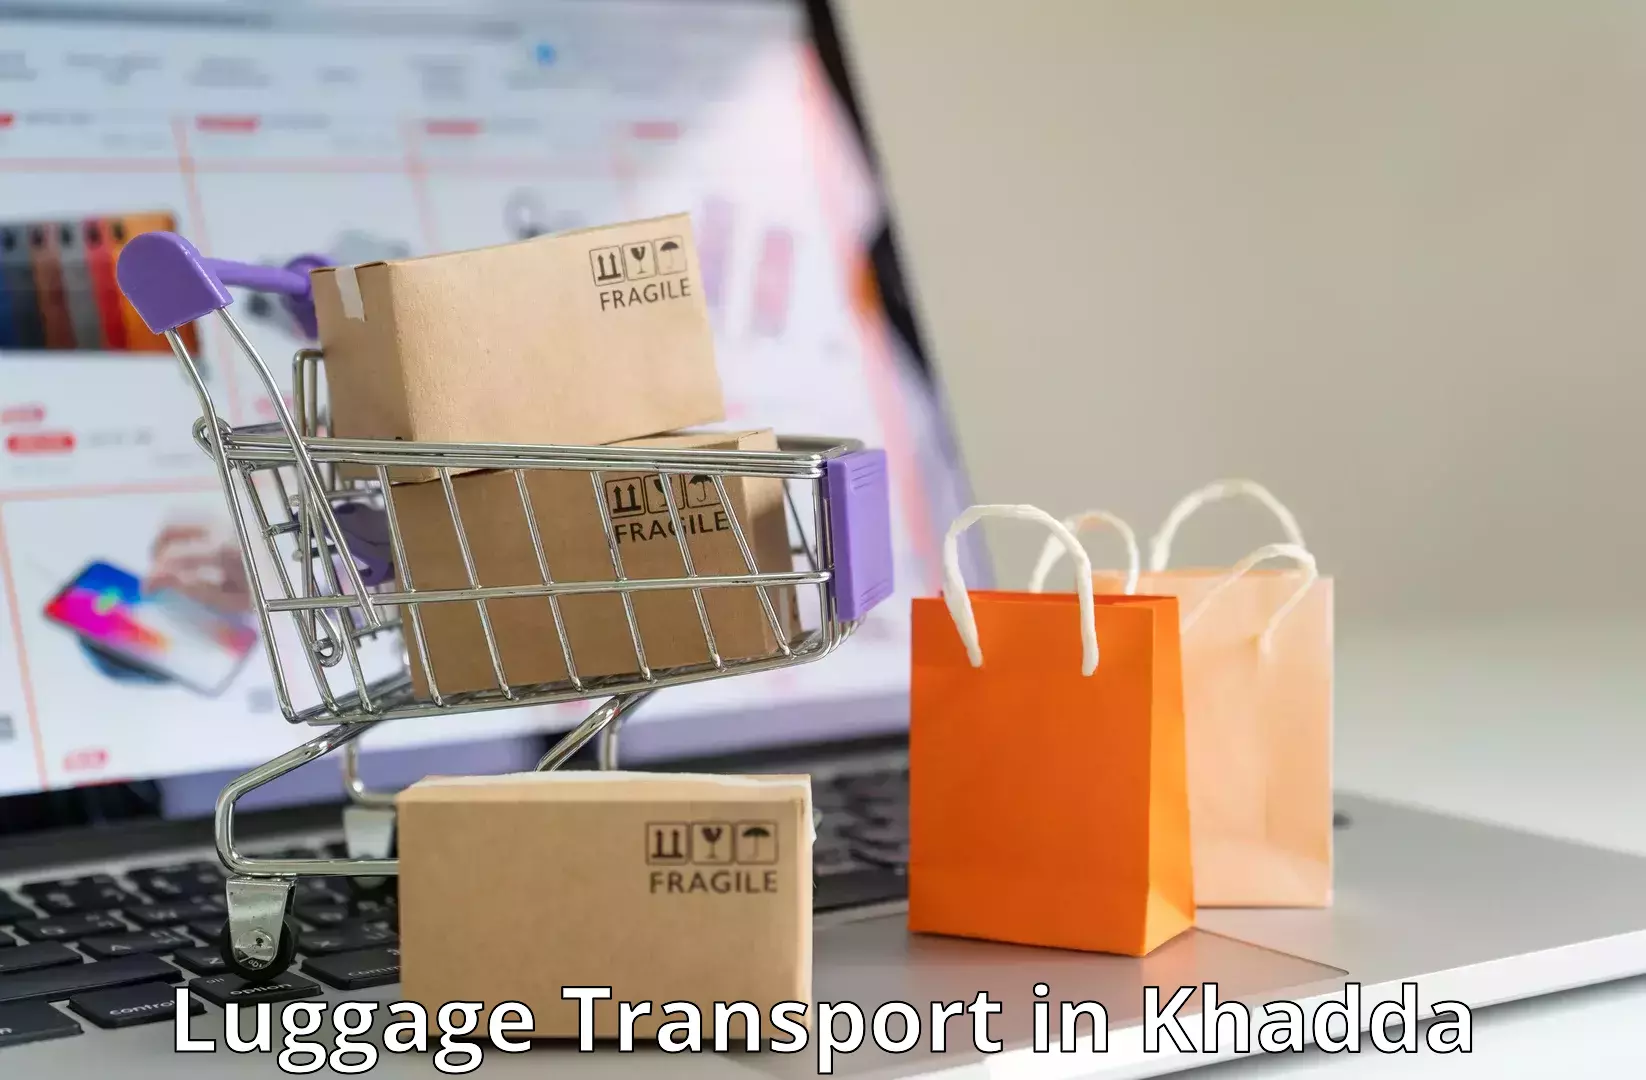 Student luggage transport in Khadda